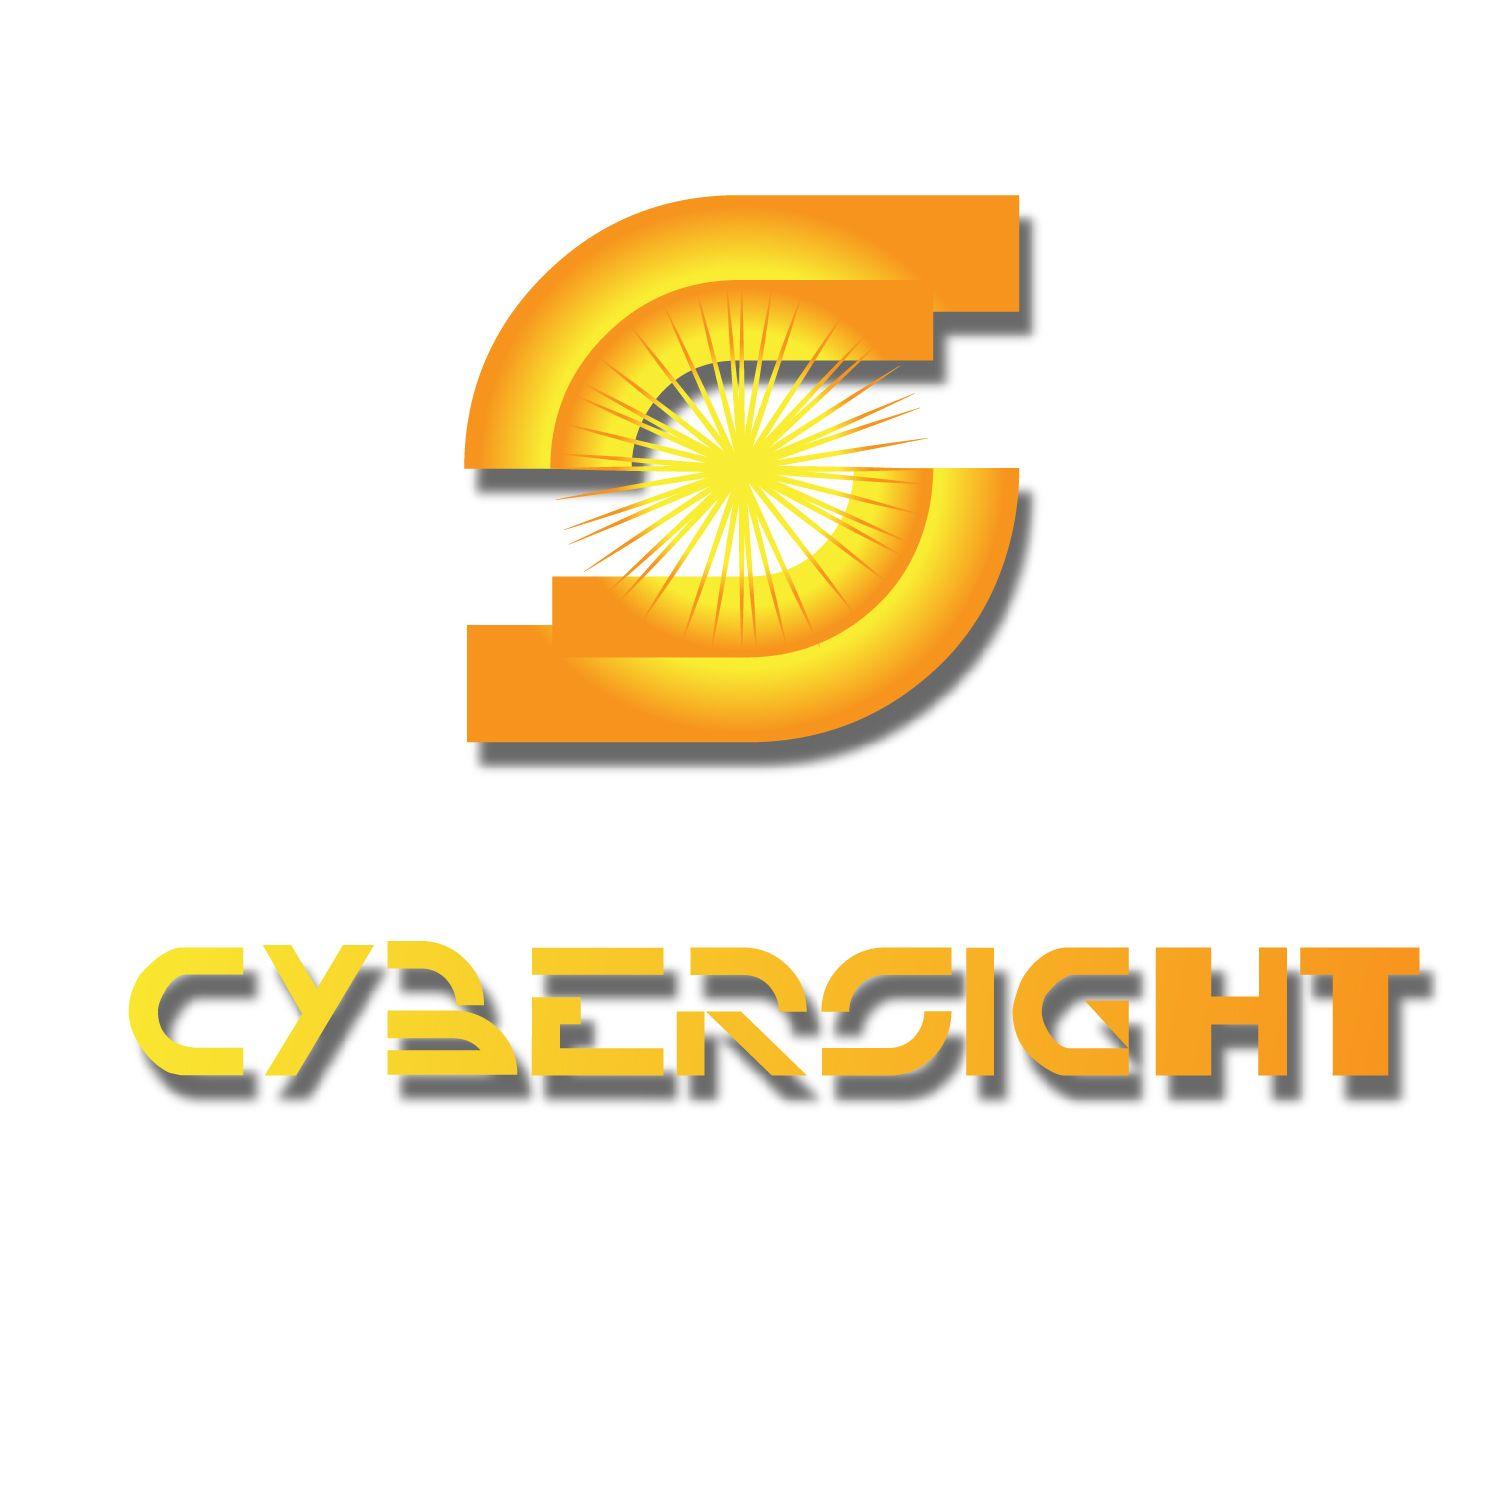 Yellow Software Logo - Serious, Modern, Software Logo Design for Cybersight by Saint-Chris ...